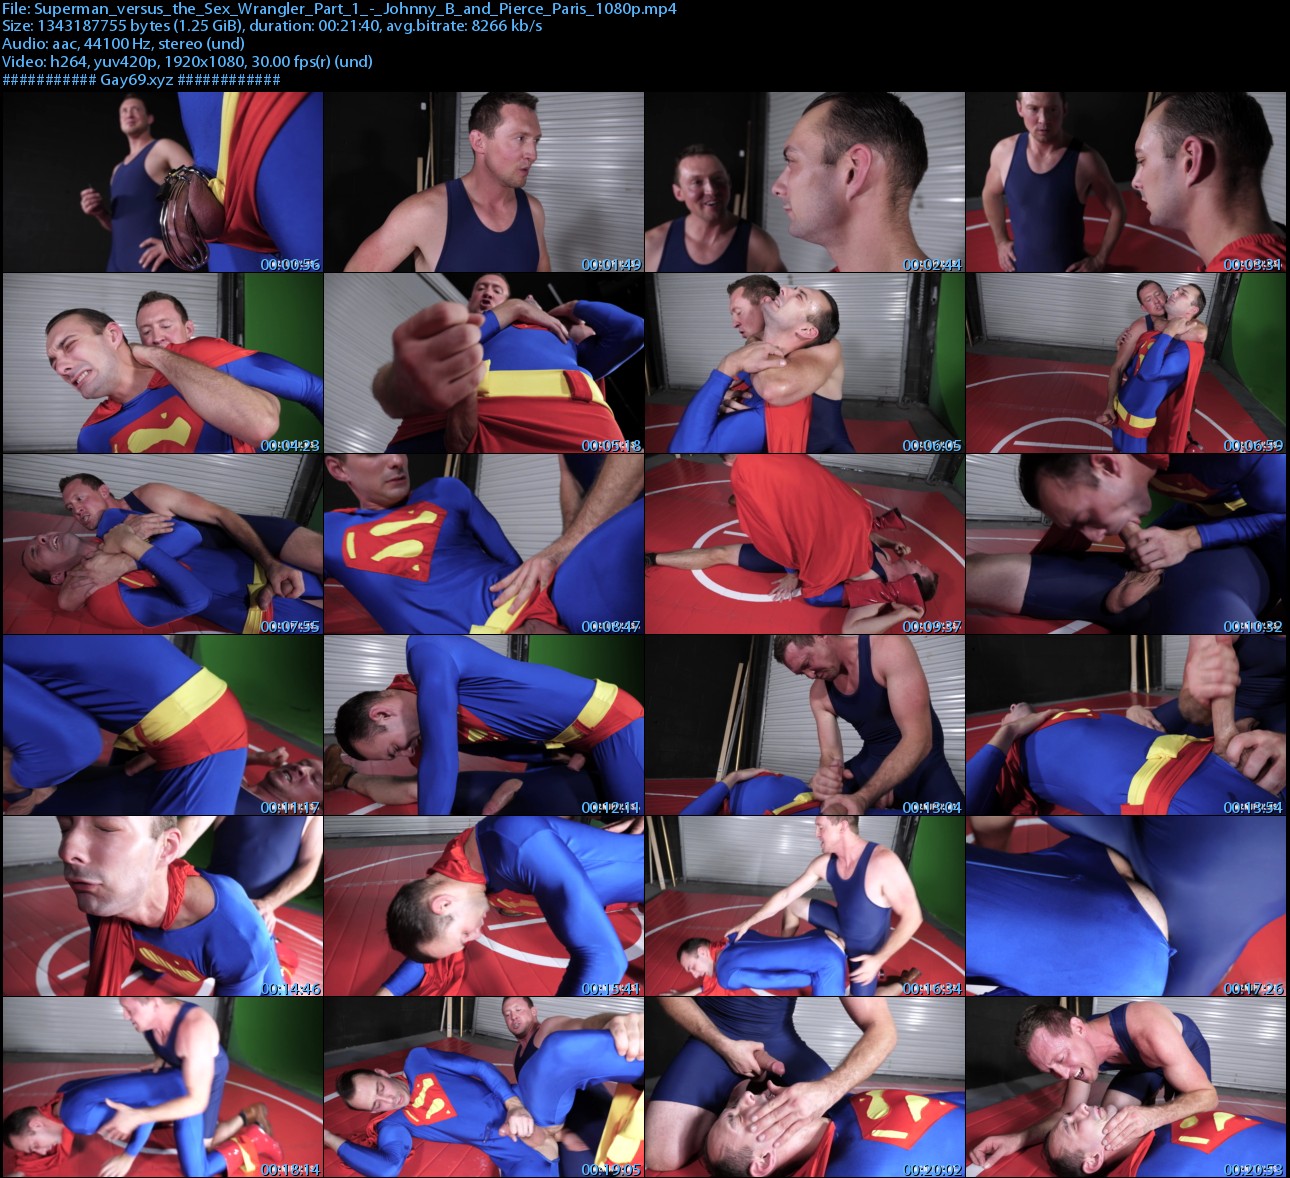 Superman_versus_the_Sex_Wrangler_Part_1_-_Johnny_B_and_Pierce_Paris_1080p_s.jpg